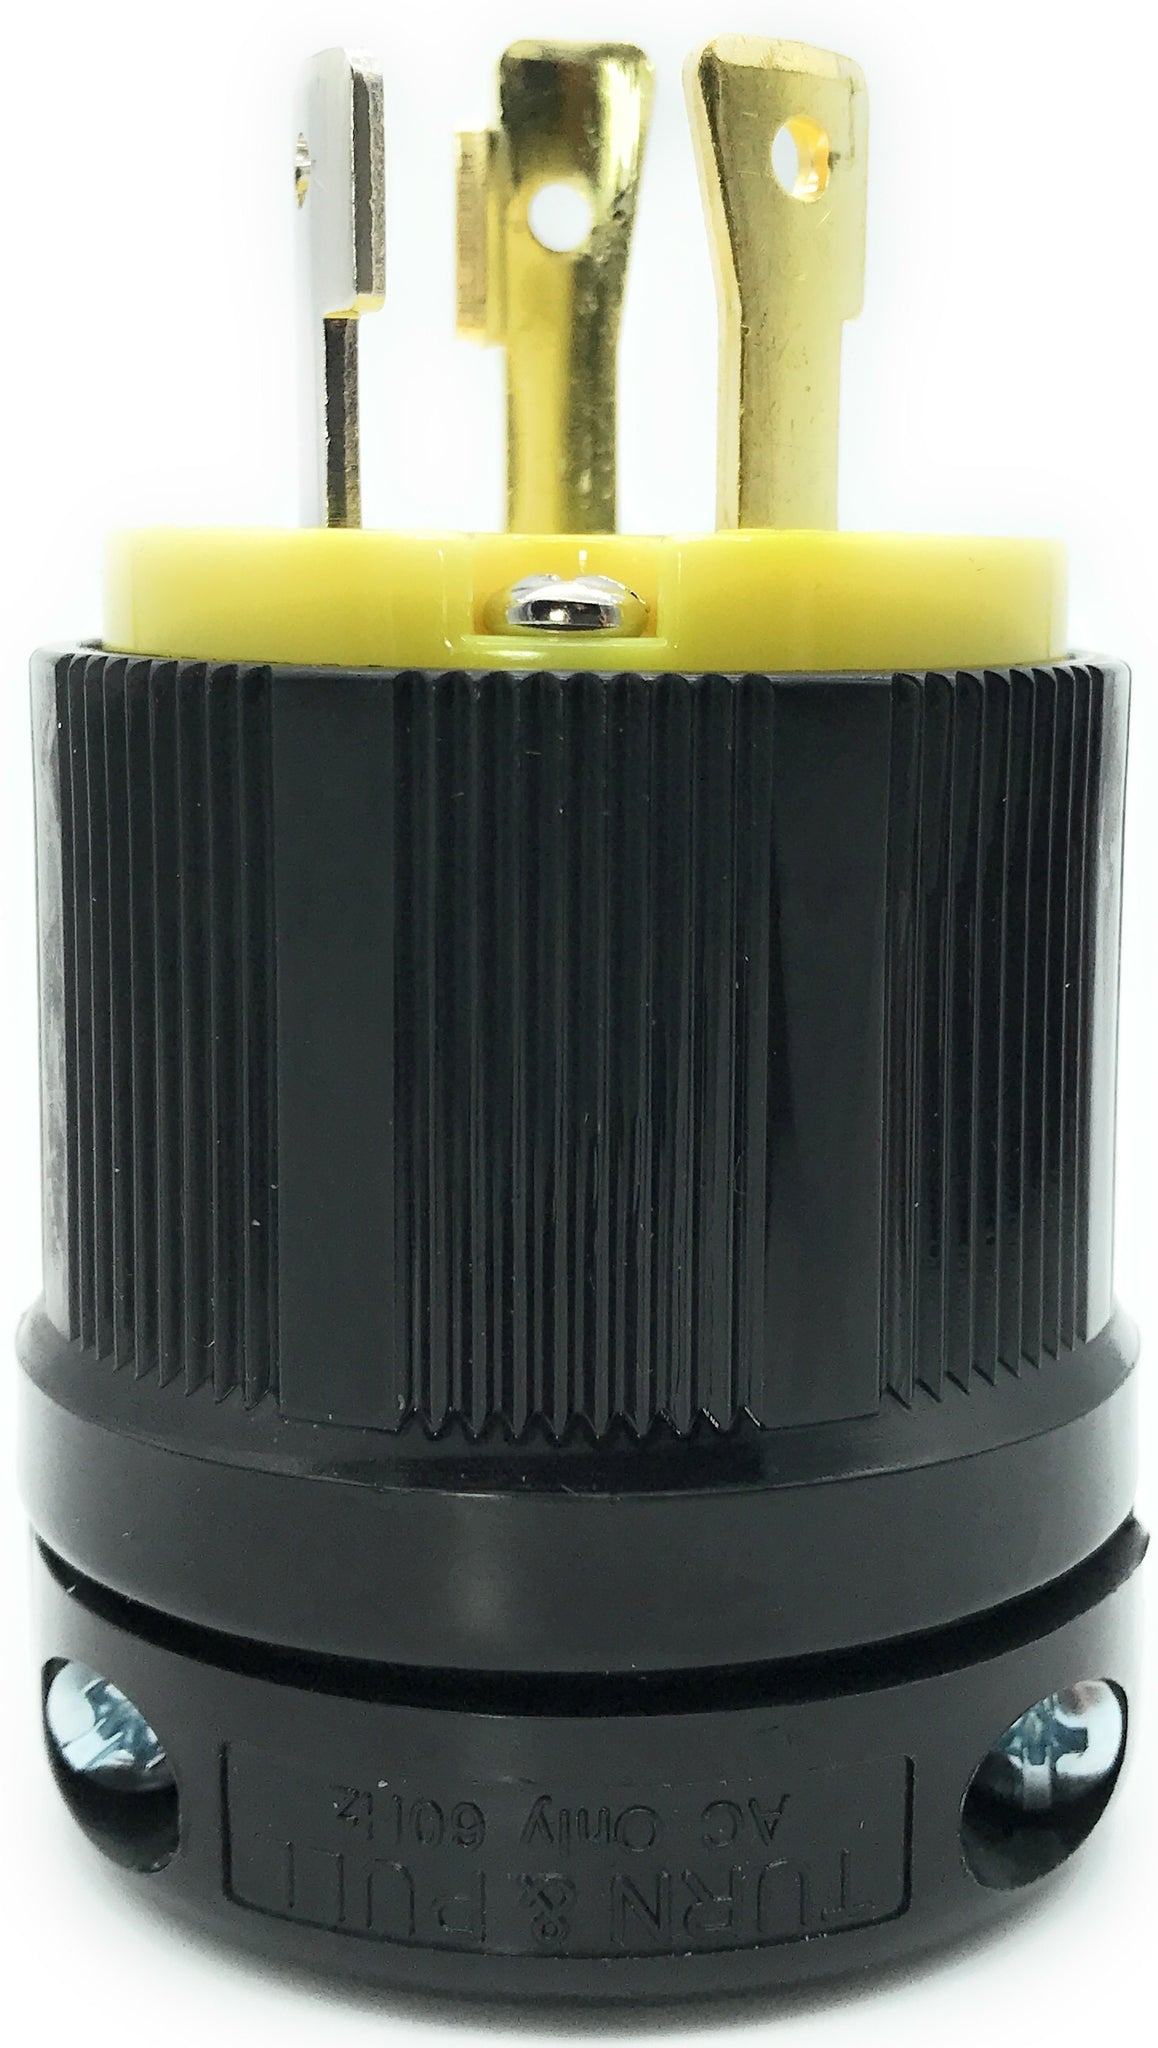 NEMA L5-30P 30A 125V Locking Receptacle Plug, Industrial Grade 3 Prong –  Journeyman-Pro